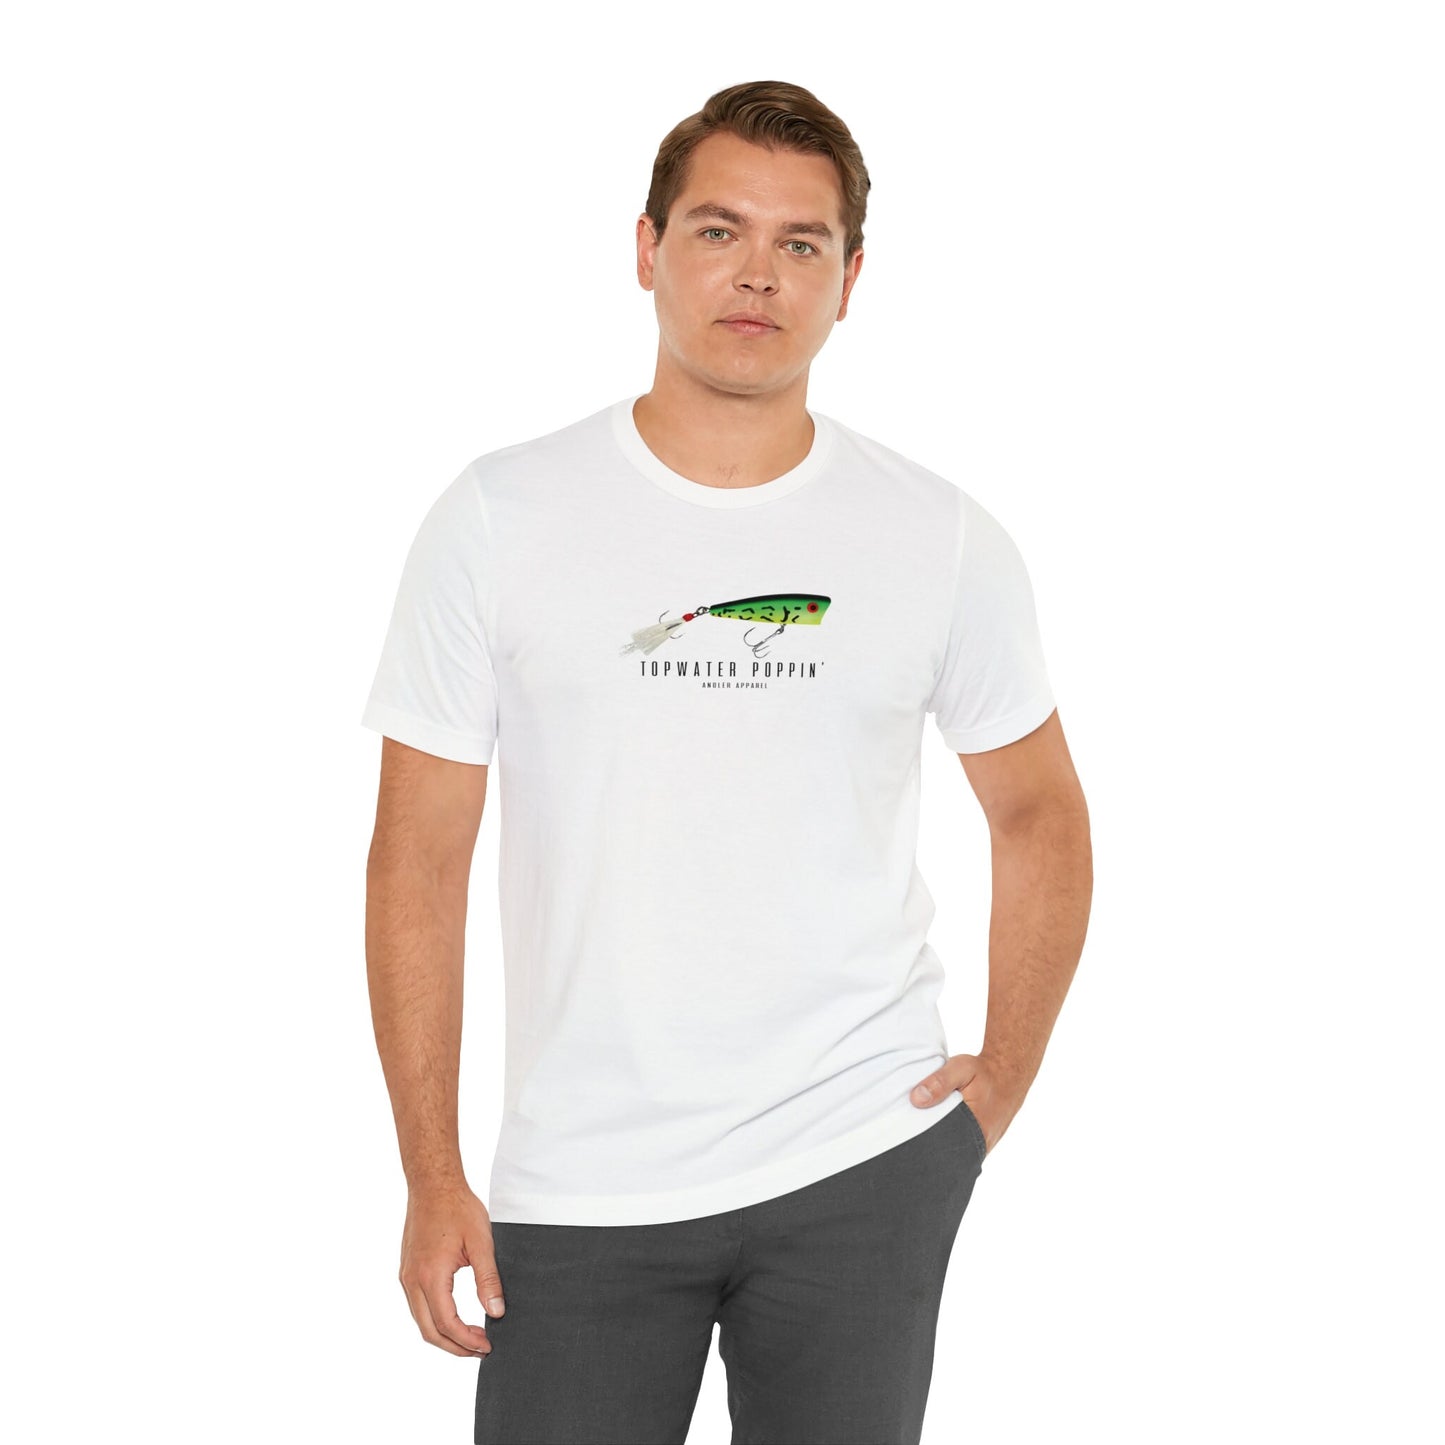 Topwater Poppin T-Shirt